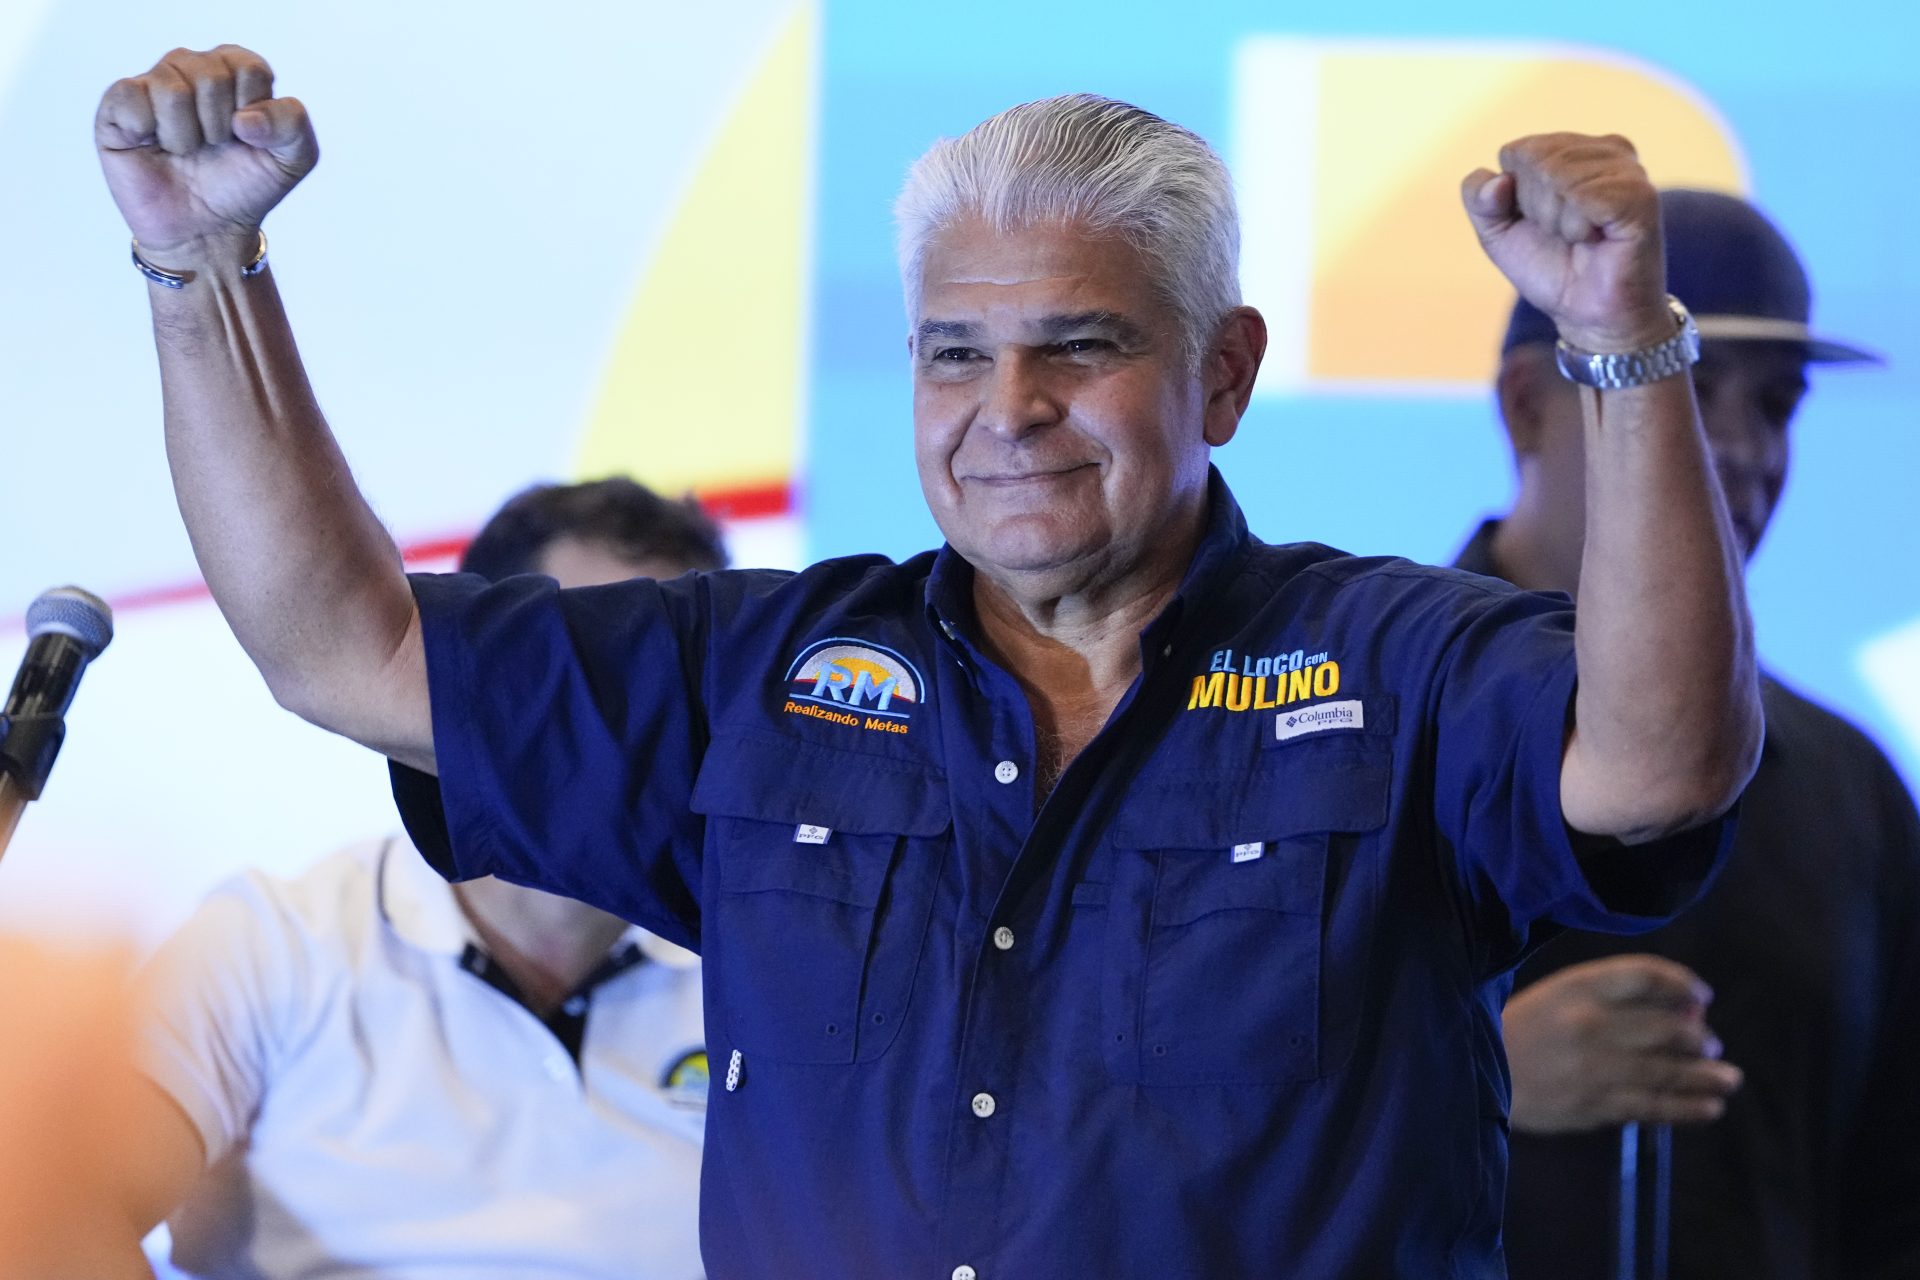 Jose Raul Mulino suppléant gagne la présidentielle au Panama